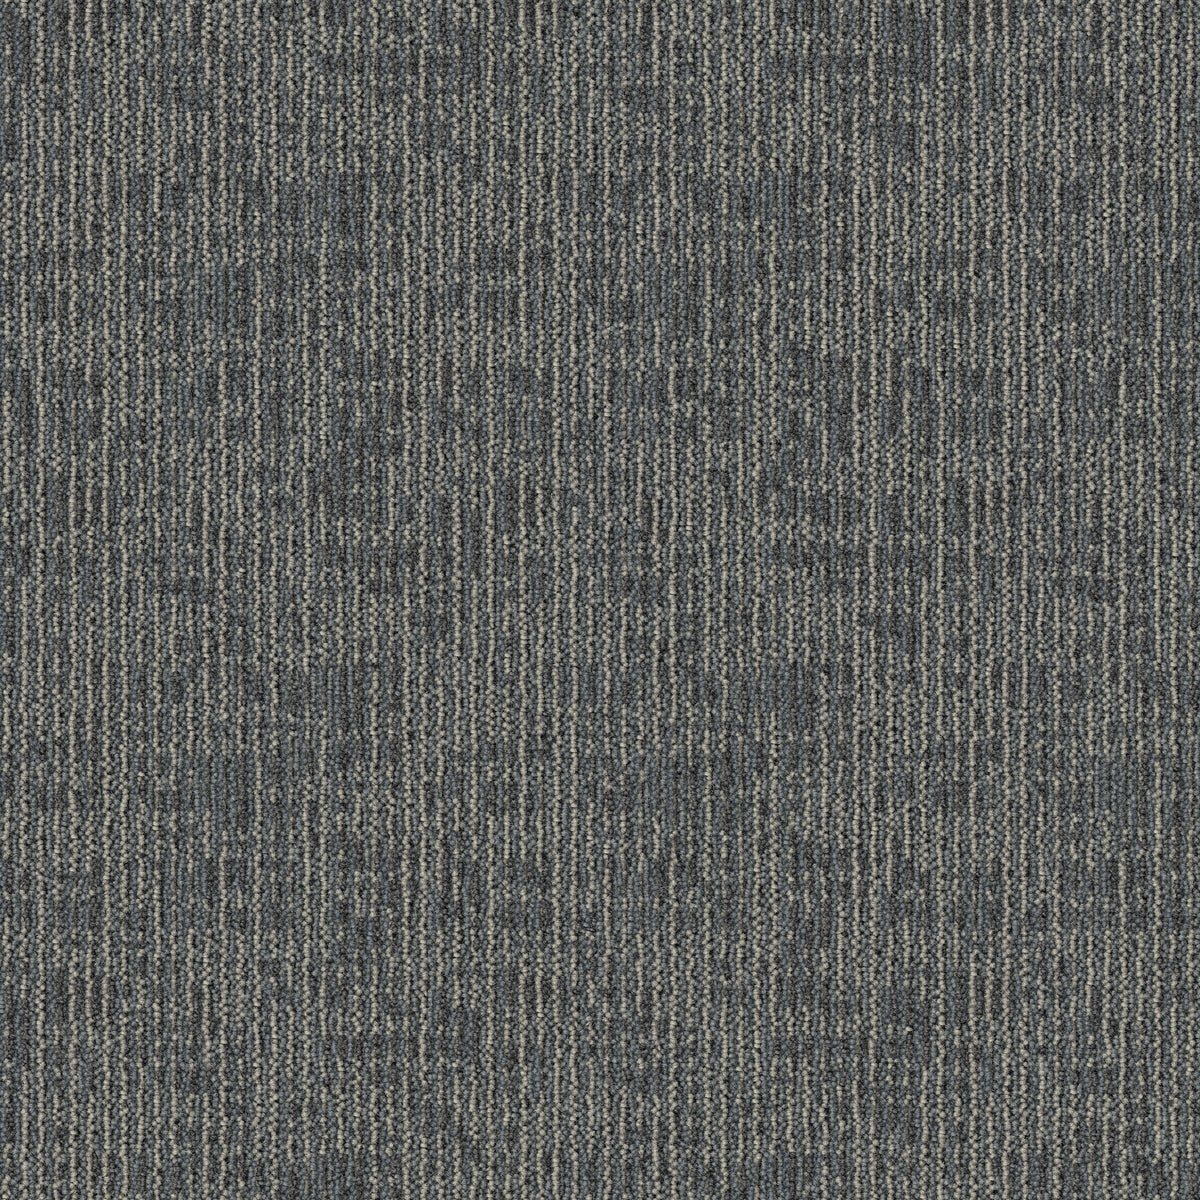 Mohawk Group - Sketch Effect - Shaded Lines - Carpet Tile - Steel